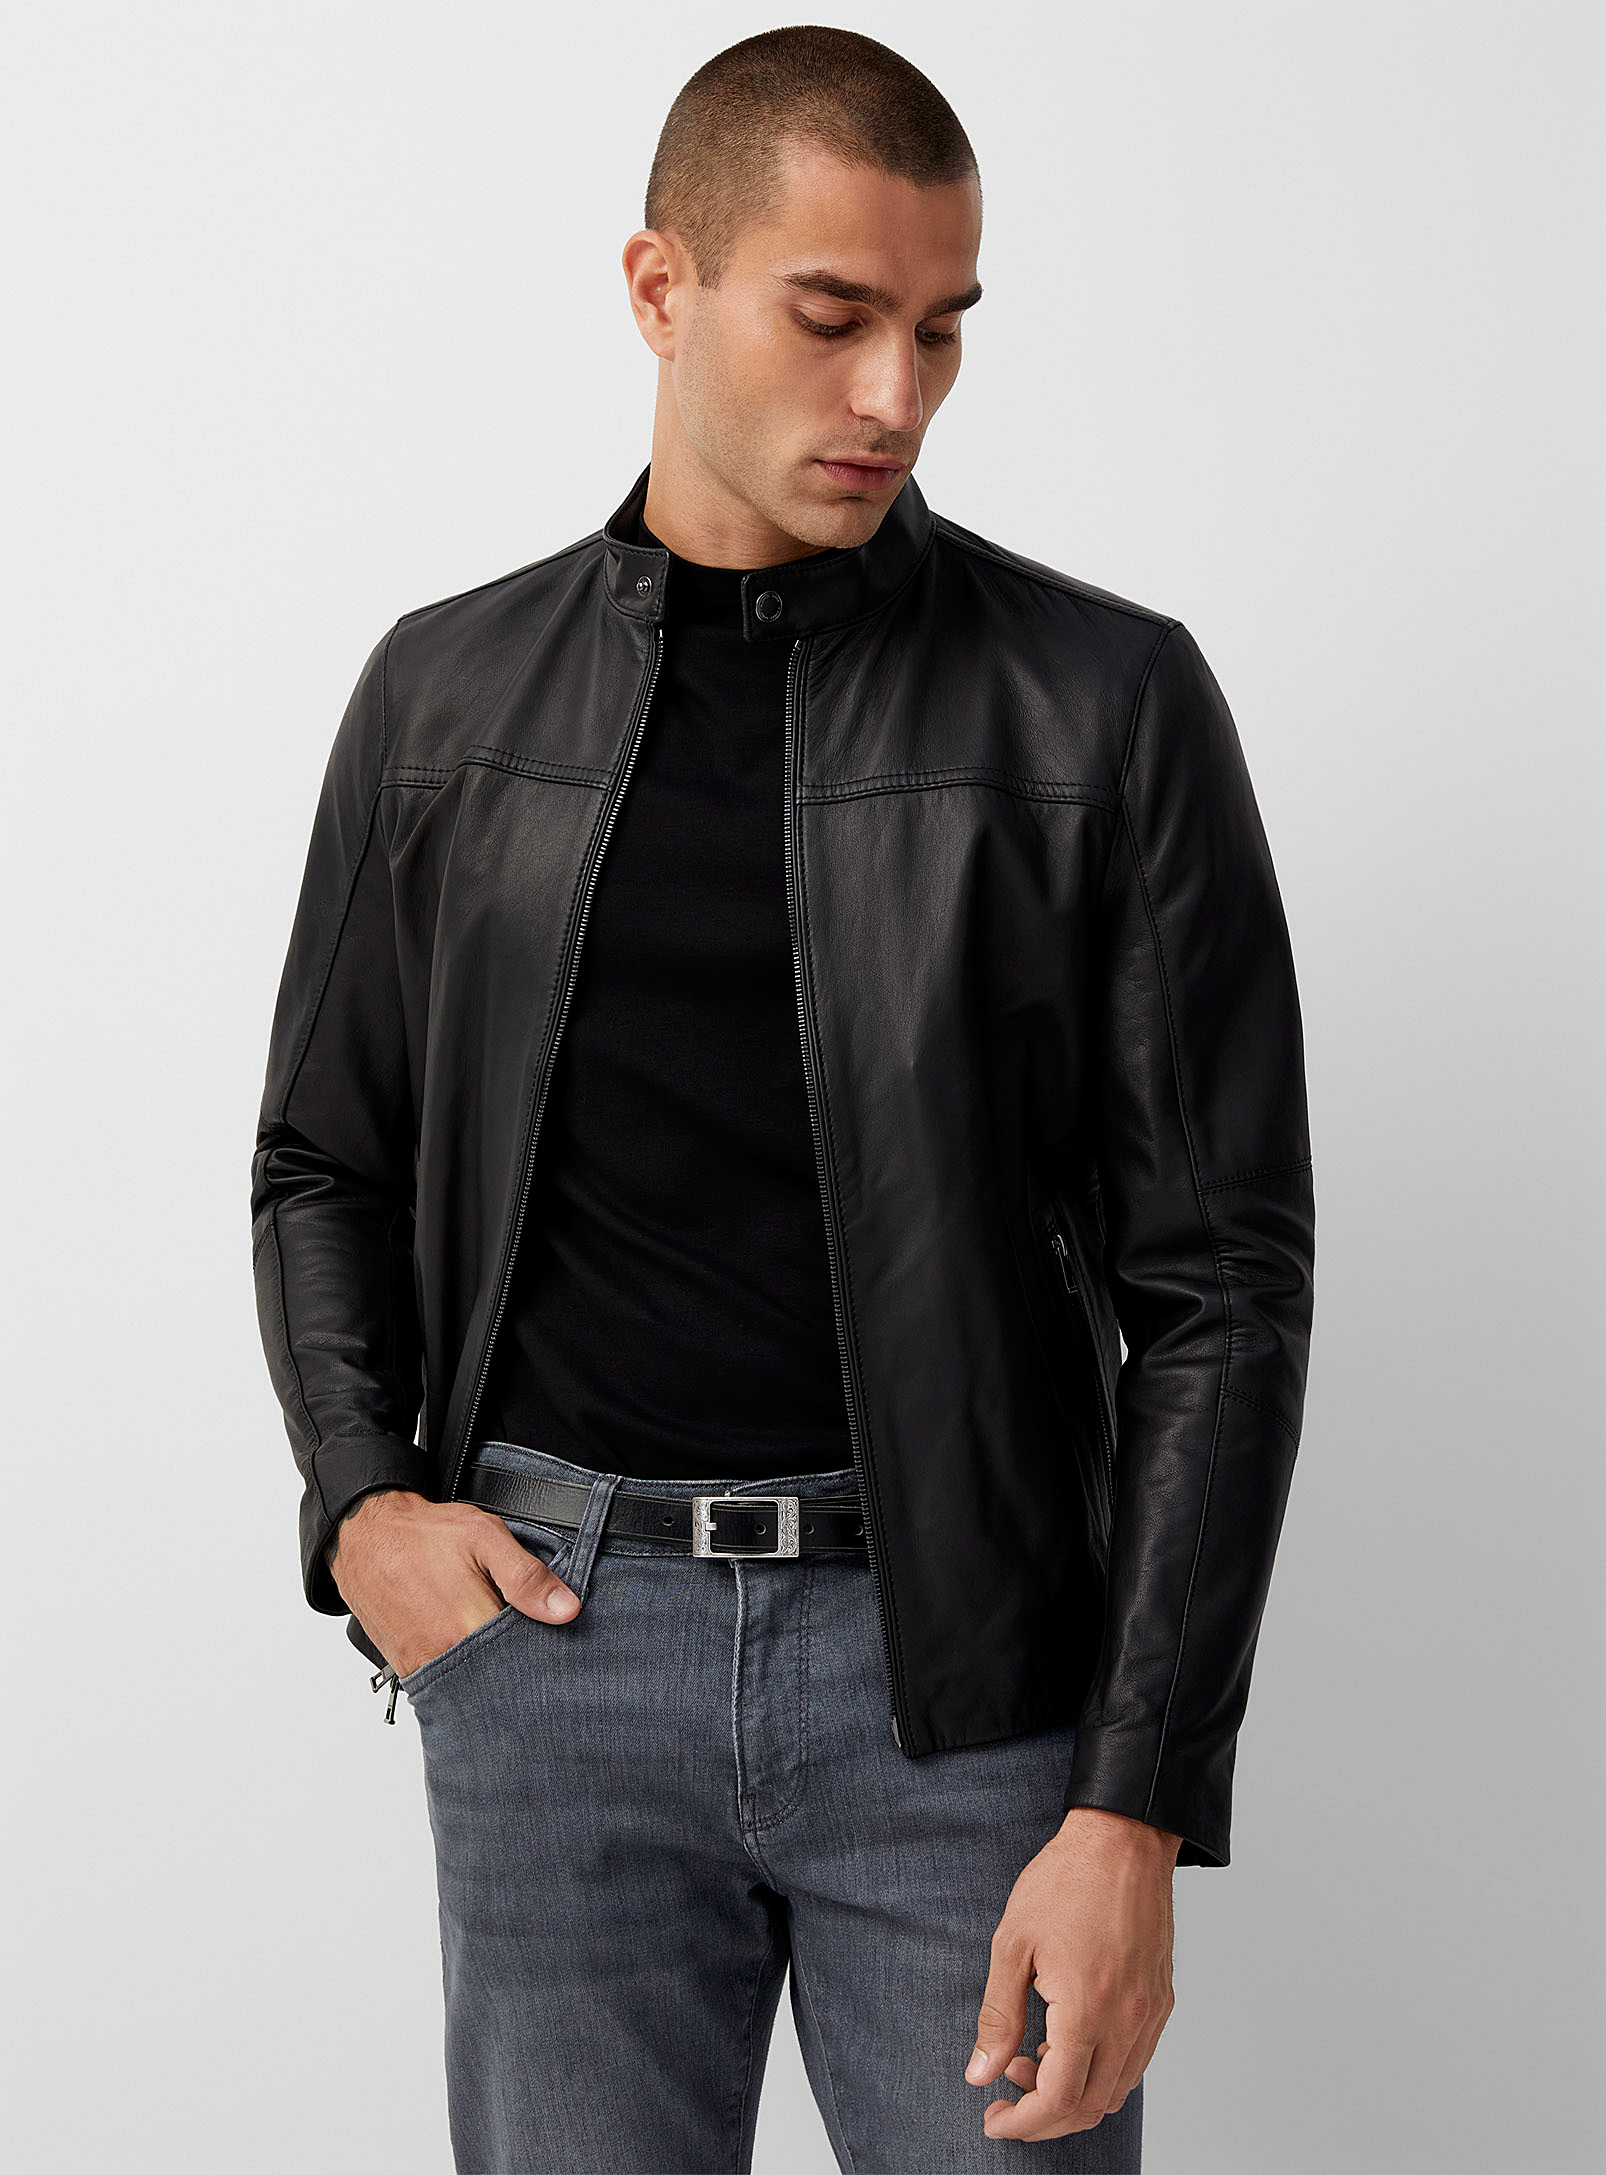 Michael Kors - Men's Biker leather jacket